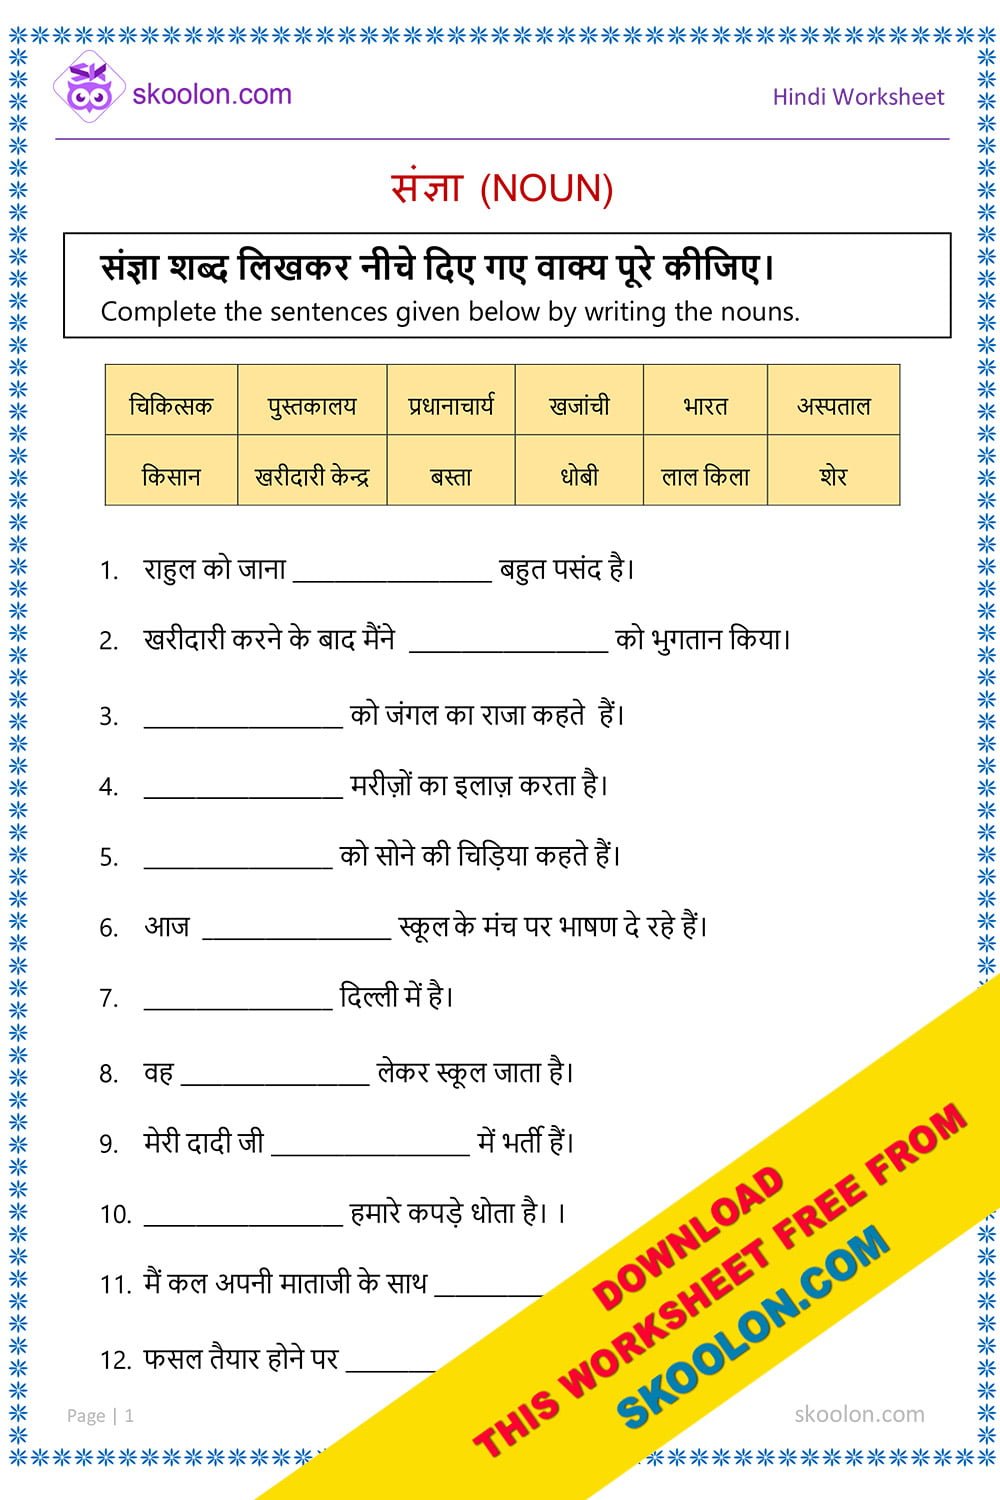 hindi-grammar-sangya-worksheet-with-answers-12-skoolon